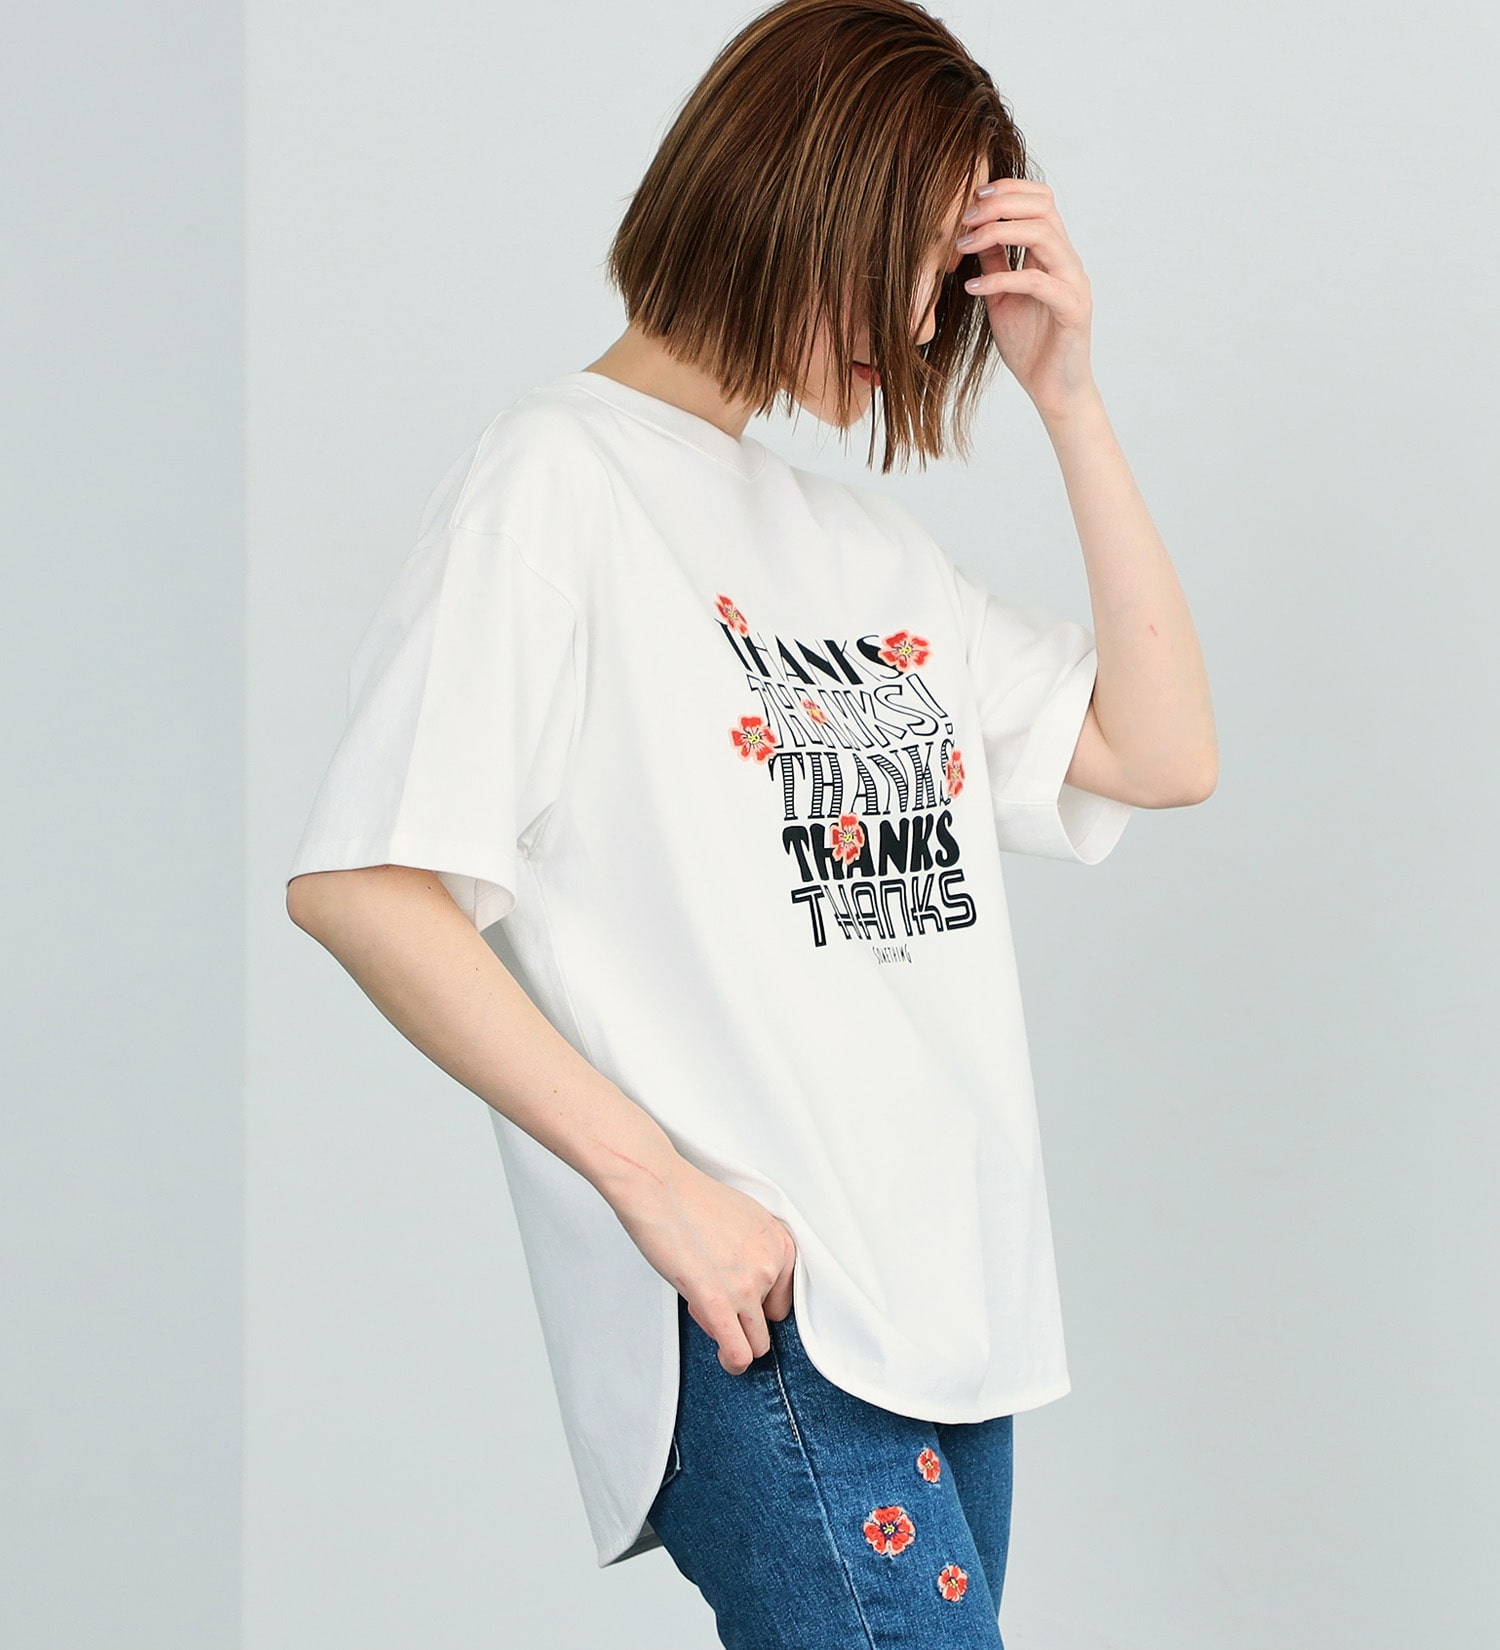 SOMETHING(サムシング)のSOMETHING POPPY 刺繍半袖Tシャツ|トップス/Tシャツ/カットソー/レディース|ホワイト